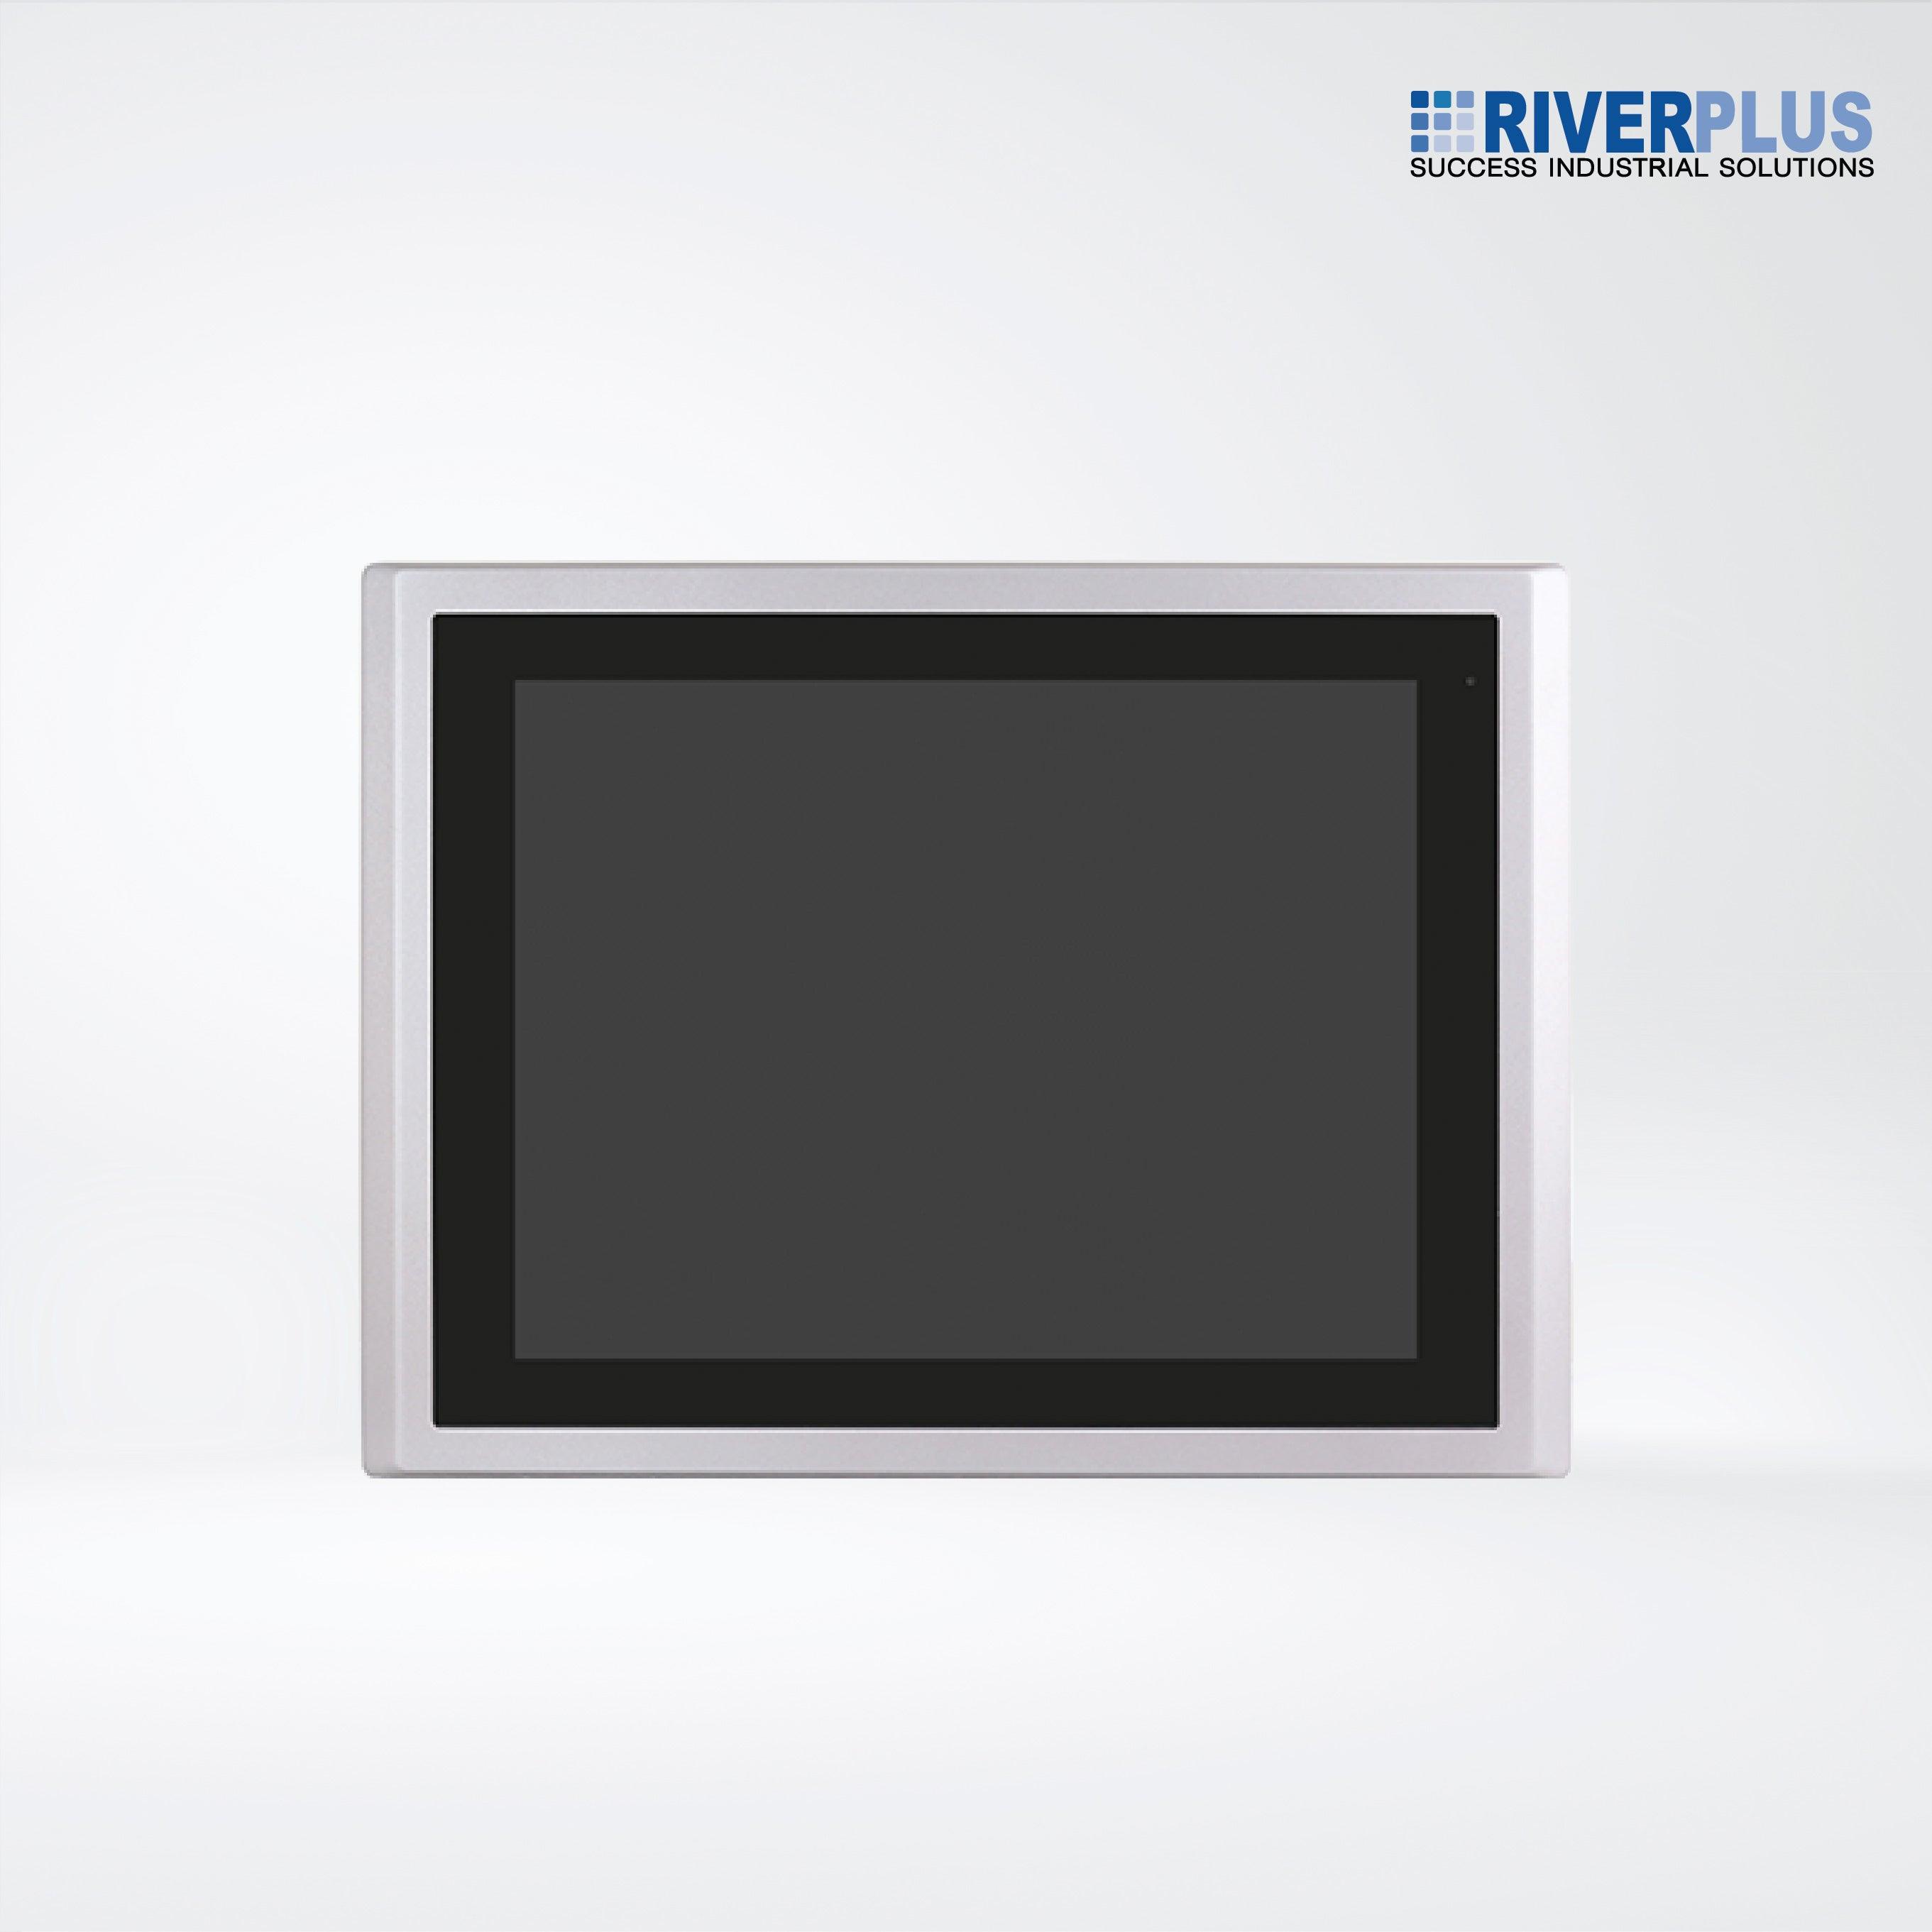 ViPAC-915G 15” Intel 6th/7th Core i3/i5/i7 Panel PC - Riverplus